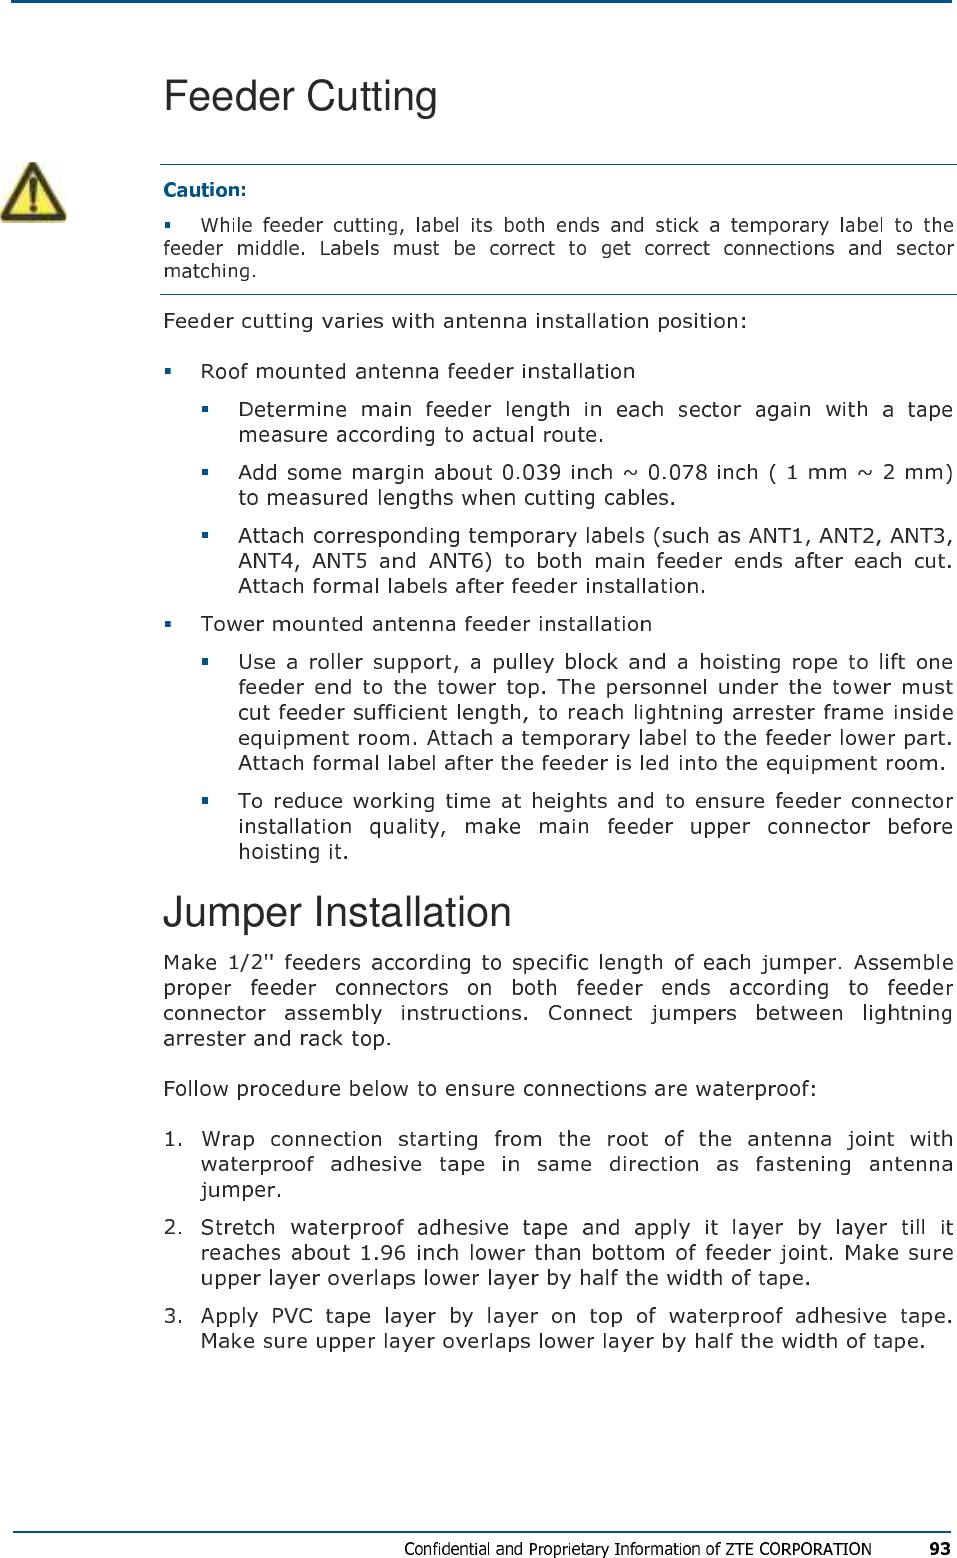 Feeder Cutting         Jumper Installation     